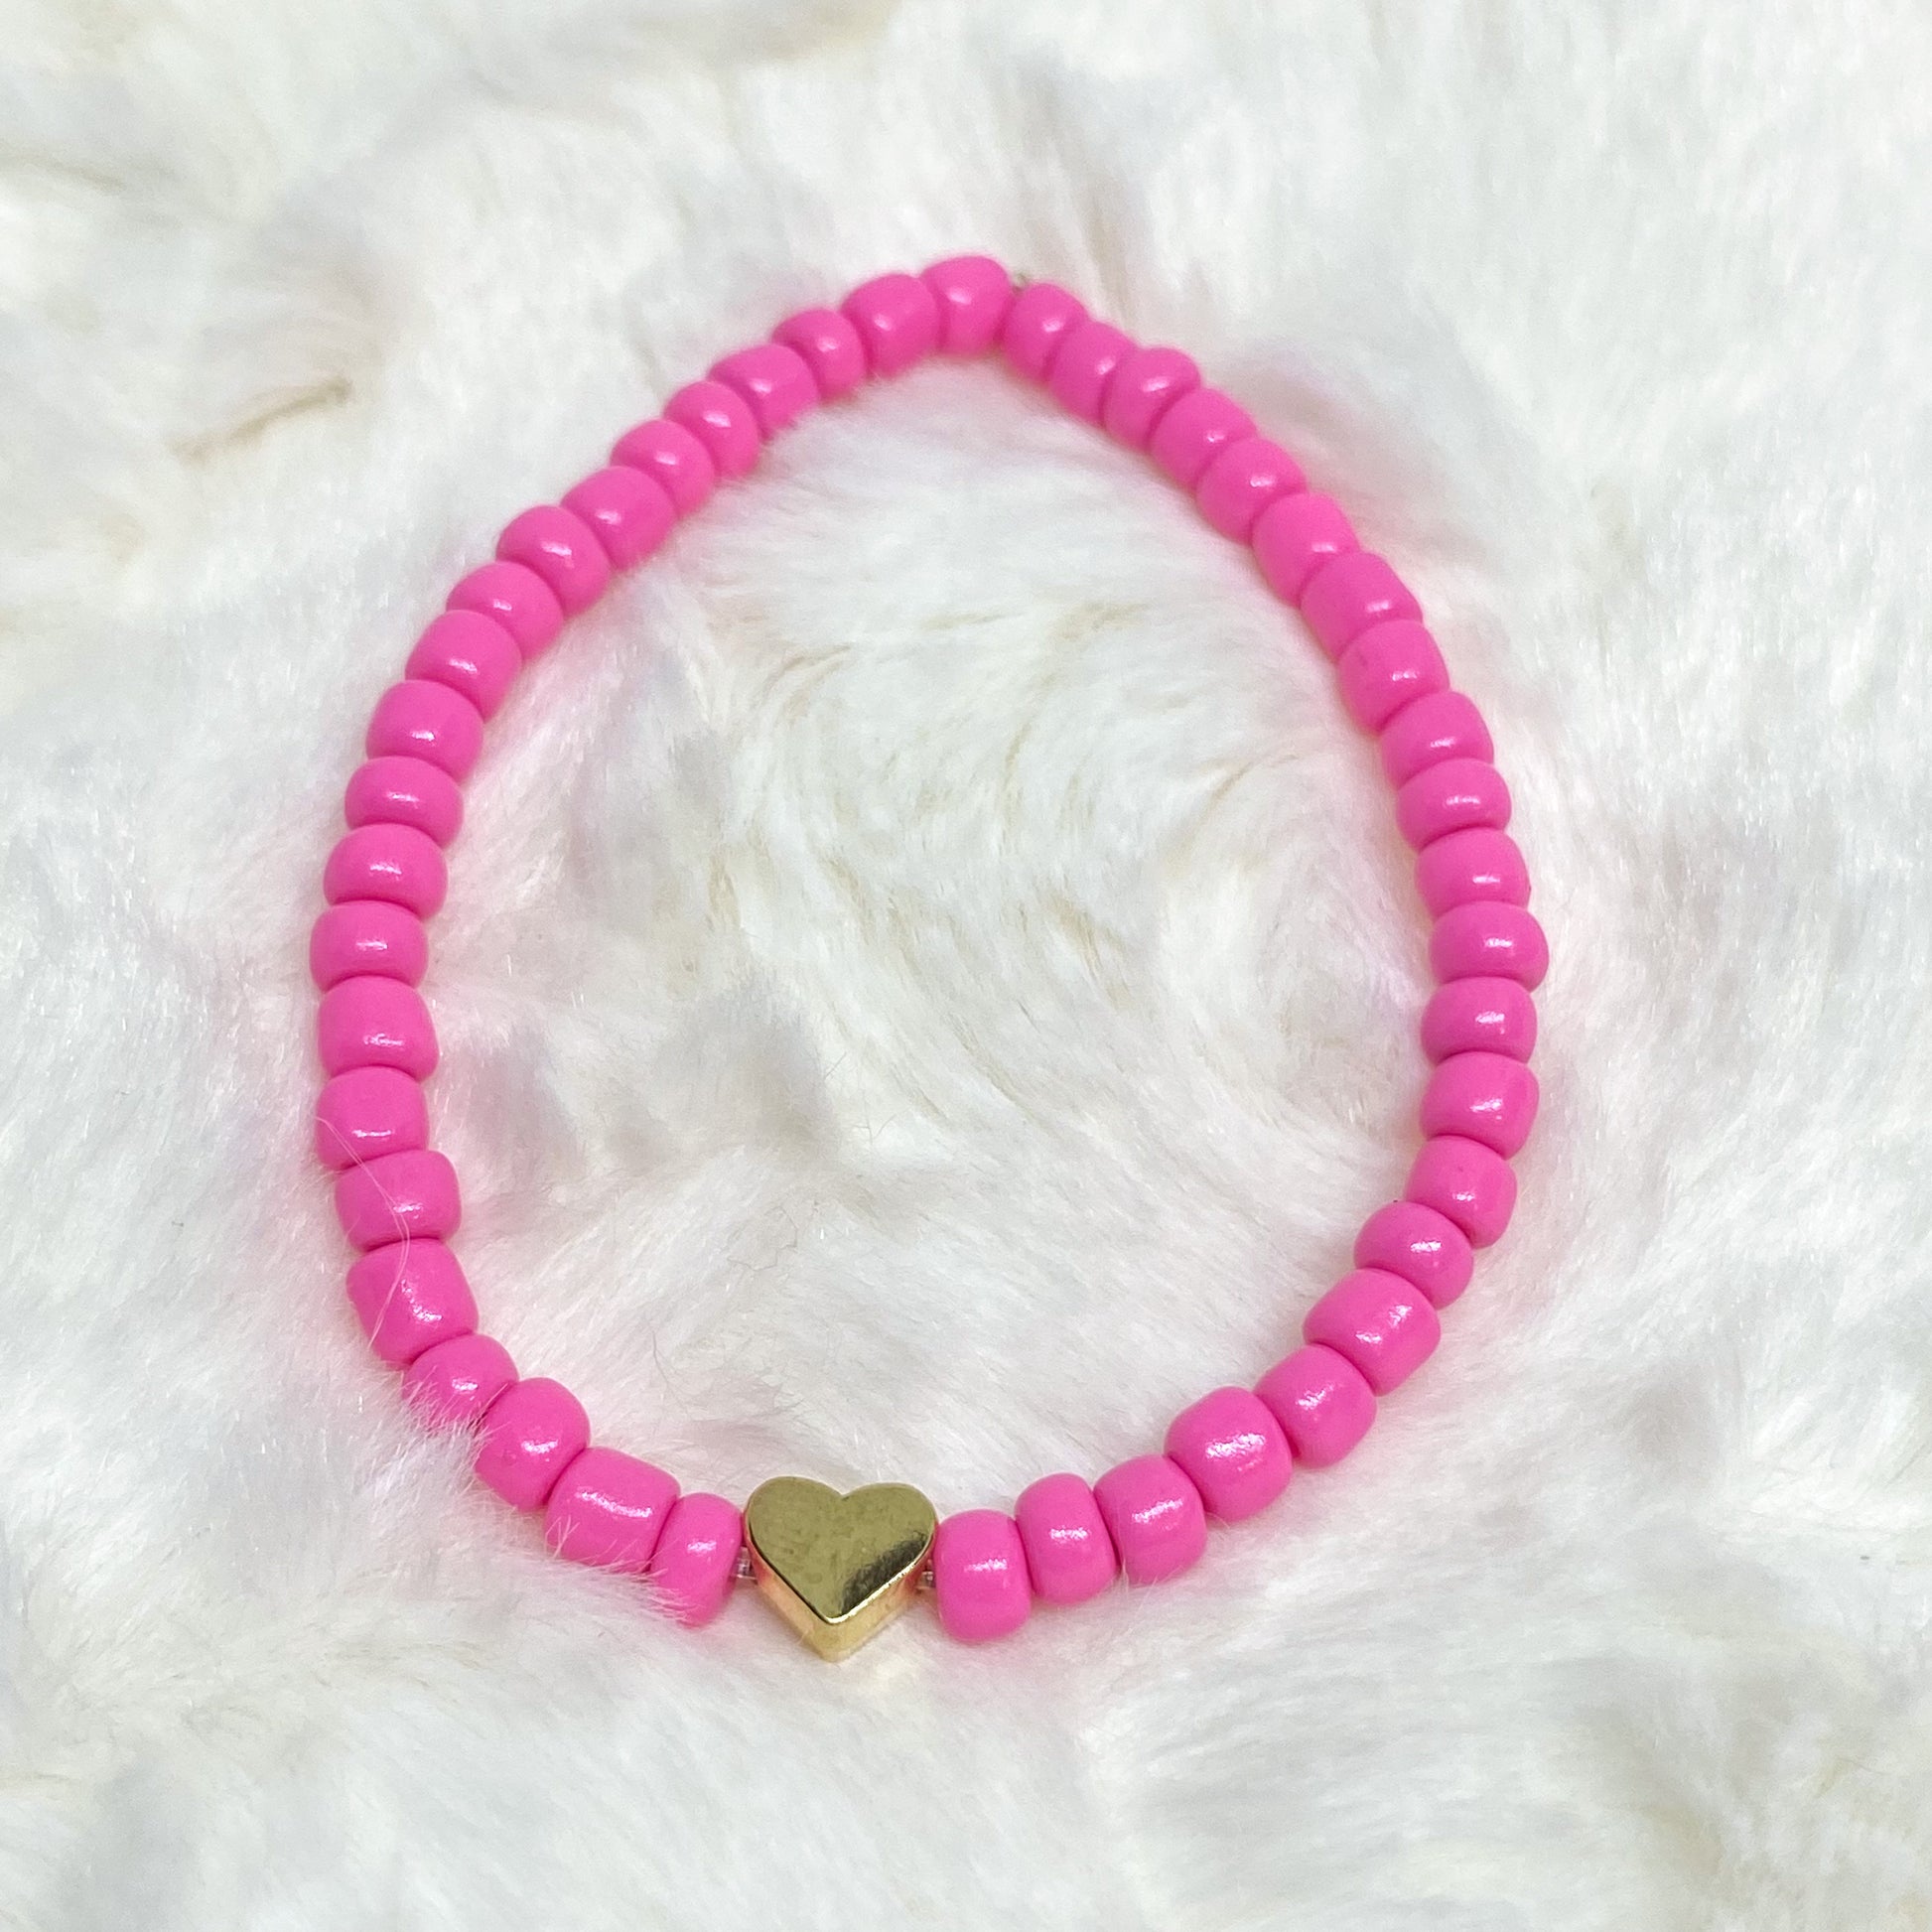 Clay Beads Bracelet 3 Piece hot Pink, Light Pink & White 